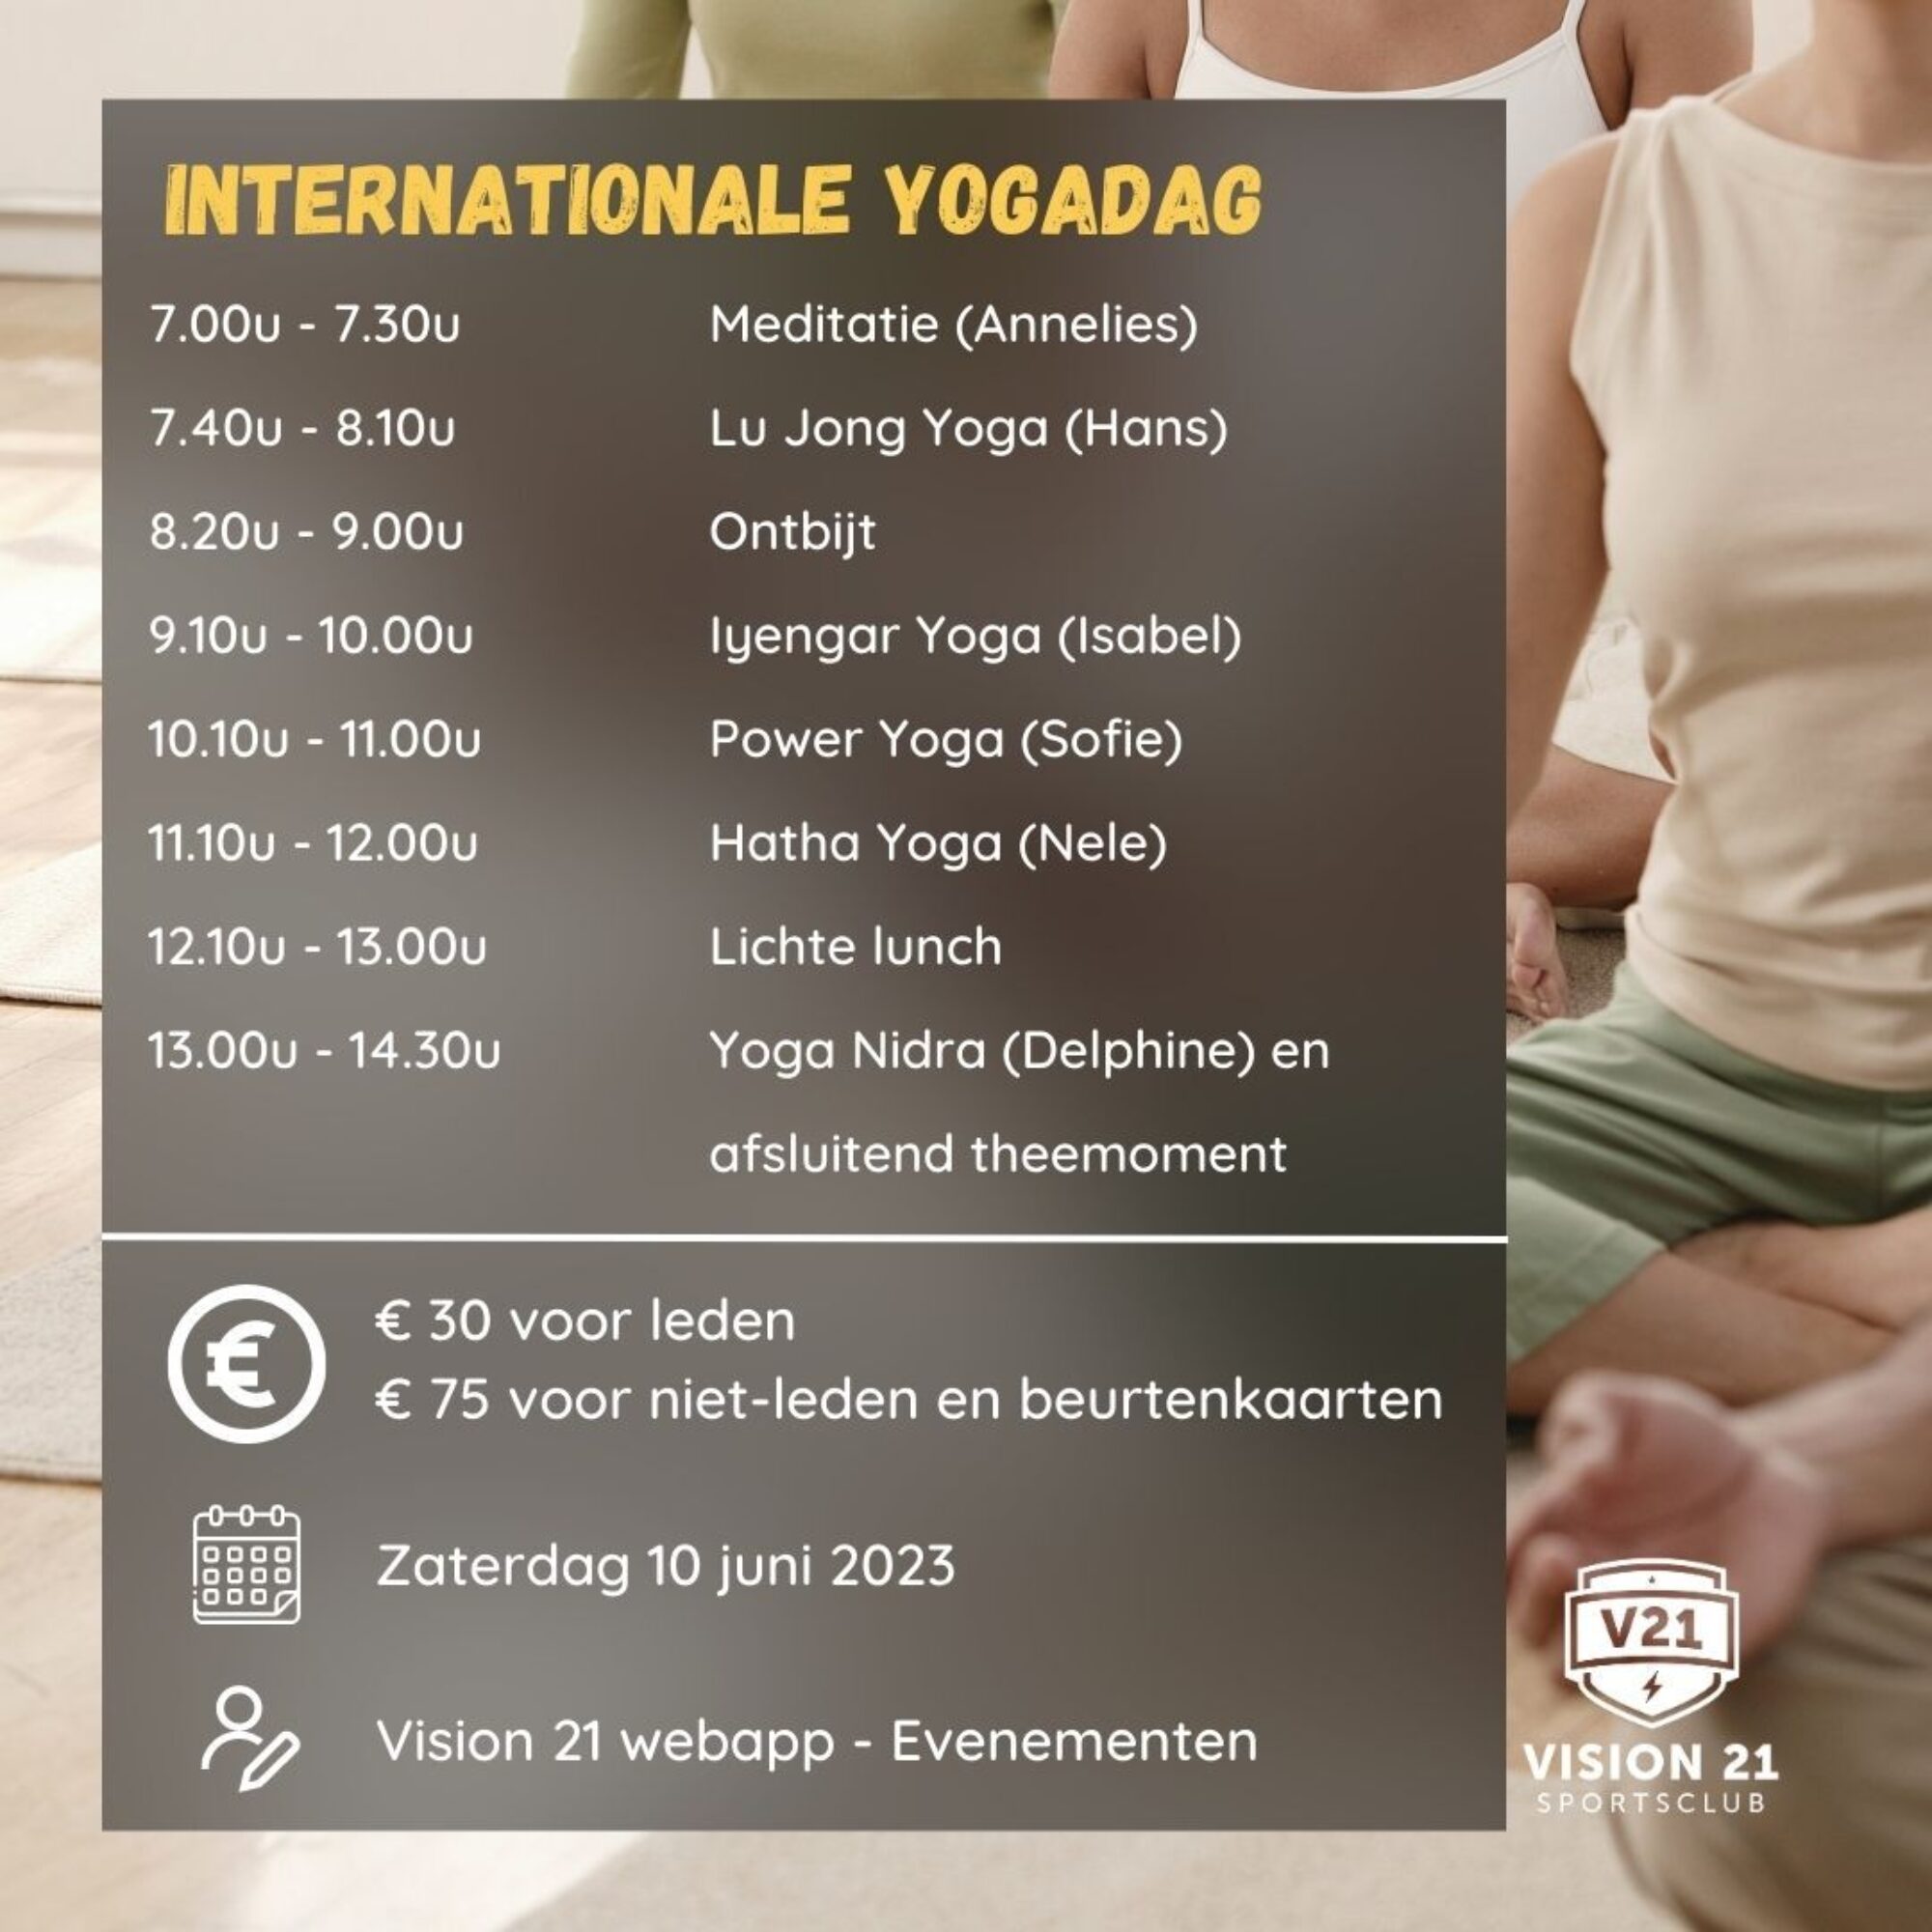 Internationale yogadag Vision 21